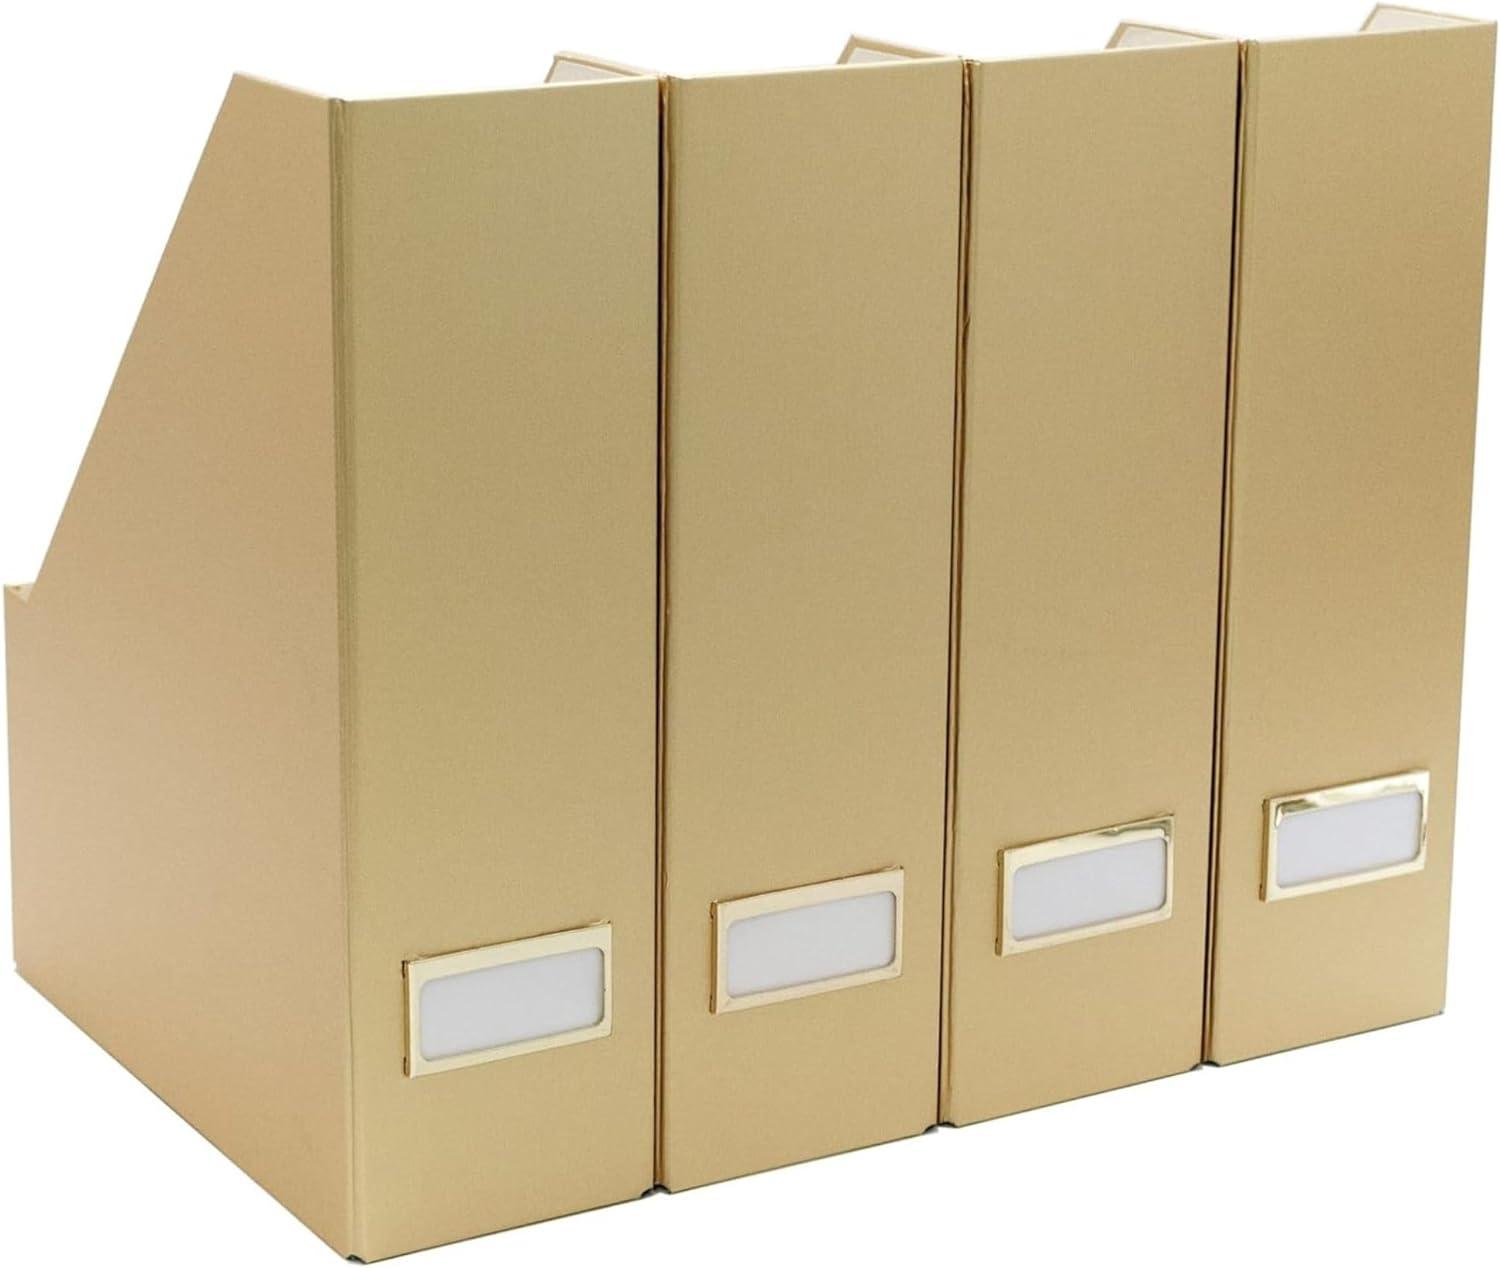 gold magazine file holder - gold office organizer set of 4 gold magazine holders - gold file folder holder 